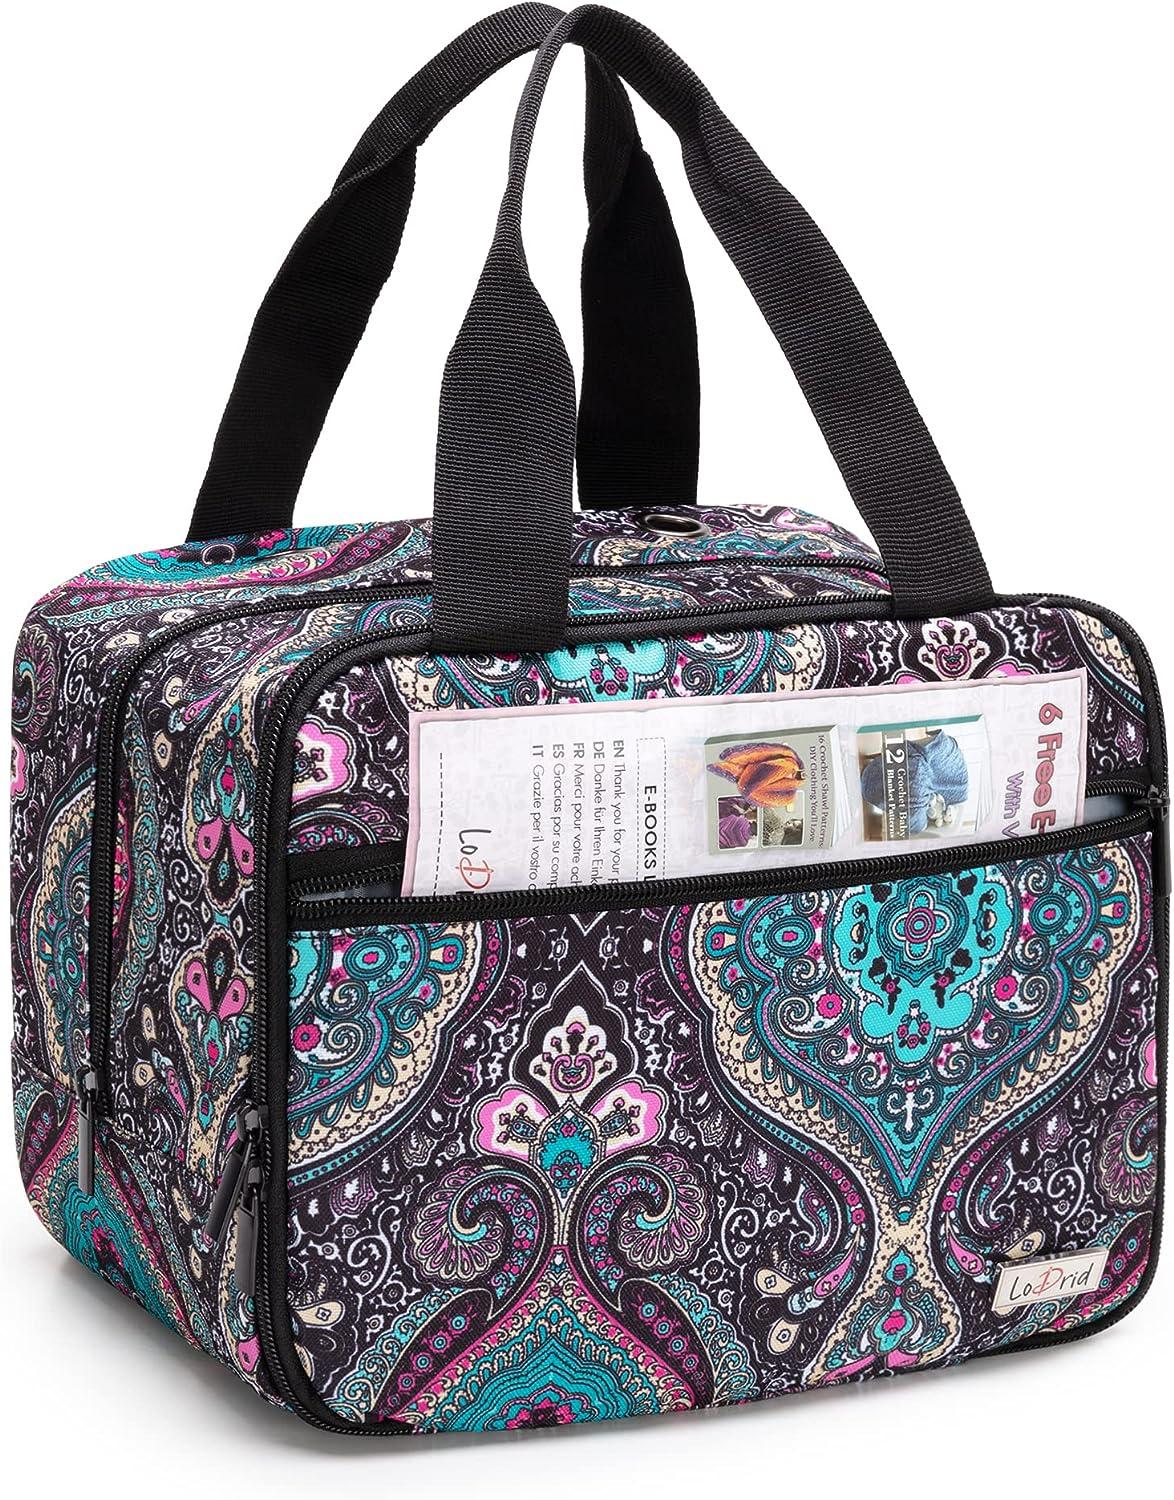 Knitting Bag for Traveling Yarn Holder Yarn Storage Bag for Crocheting